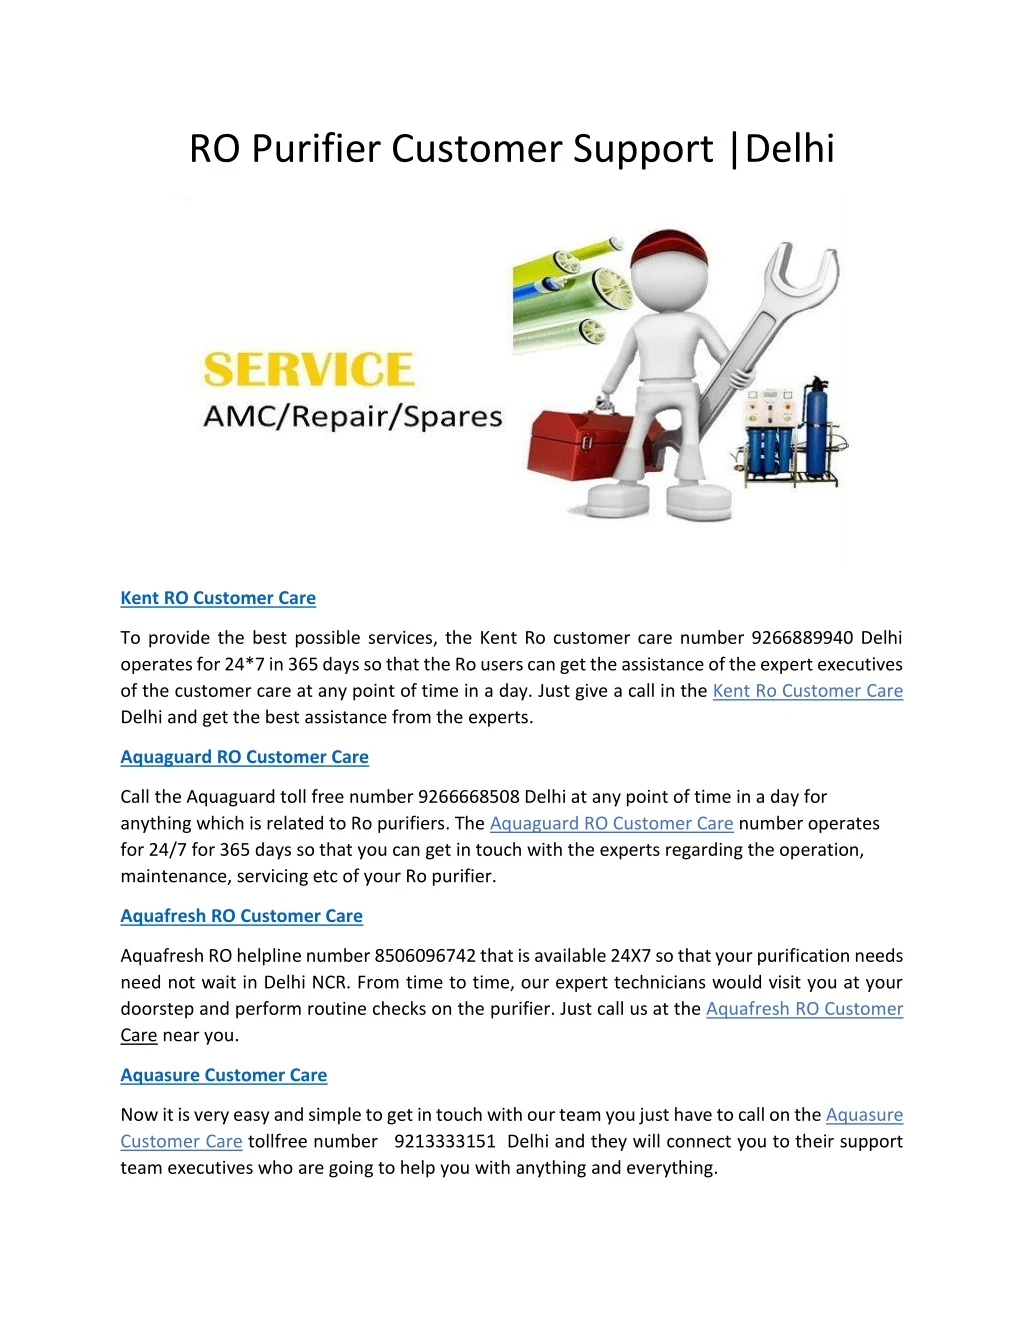 ro purifier customer support delhi